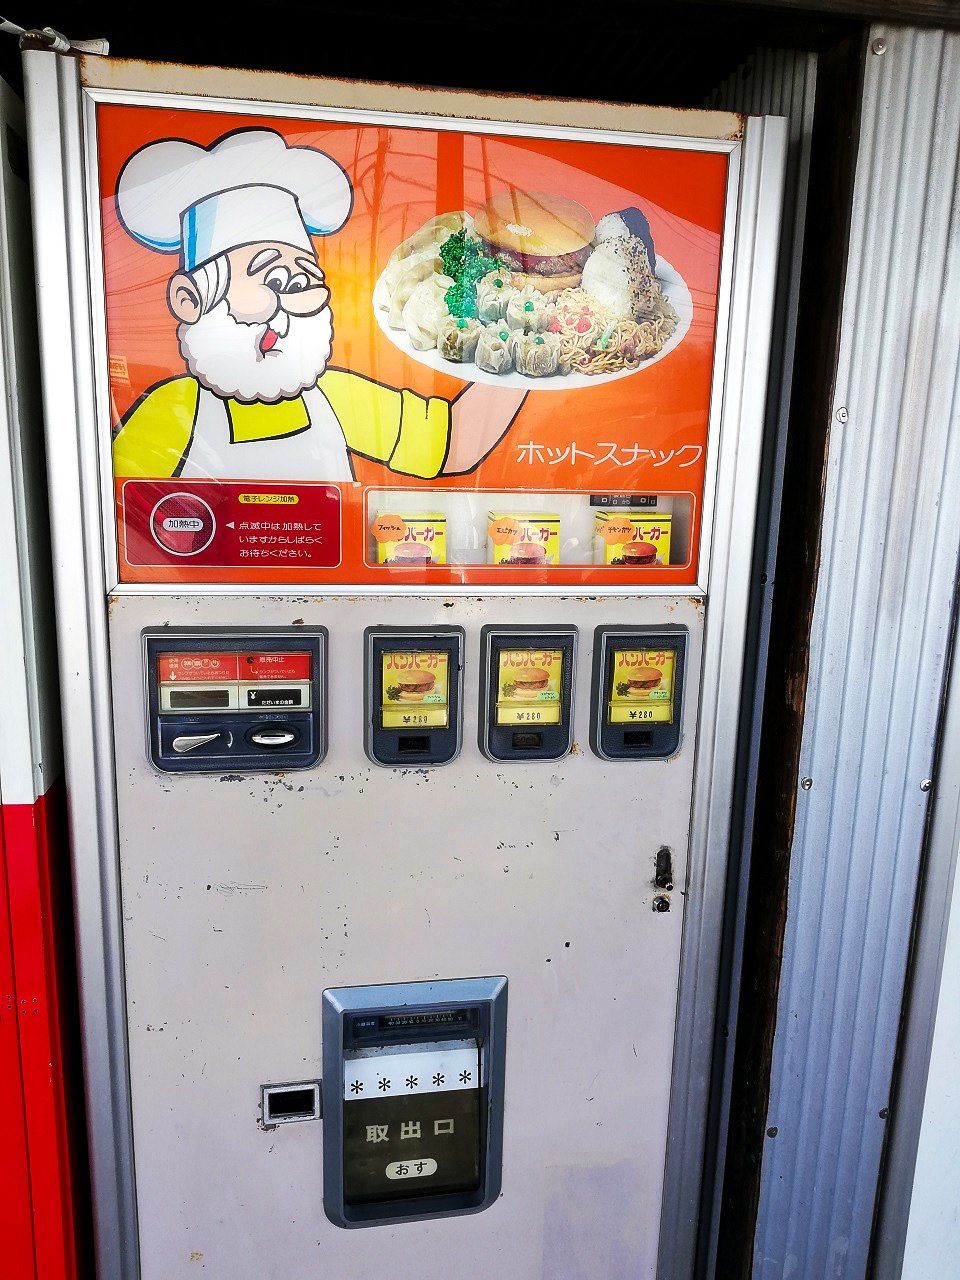 The Big Burger vending machine.